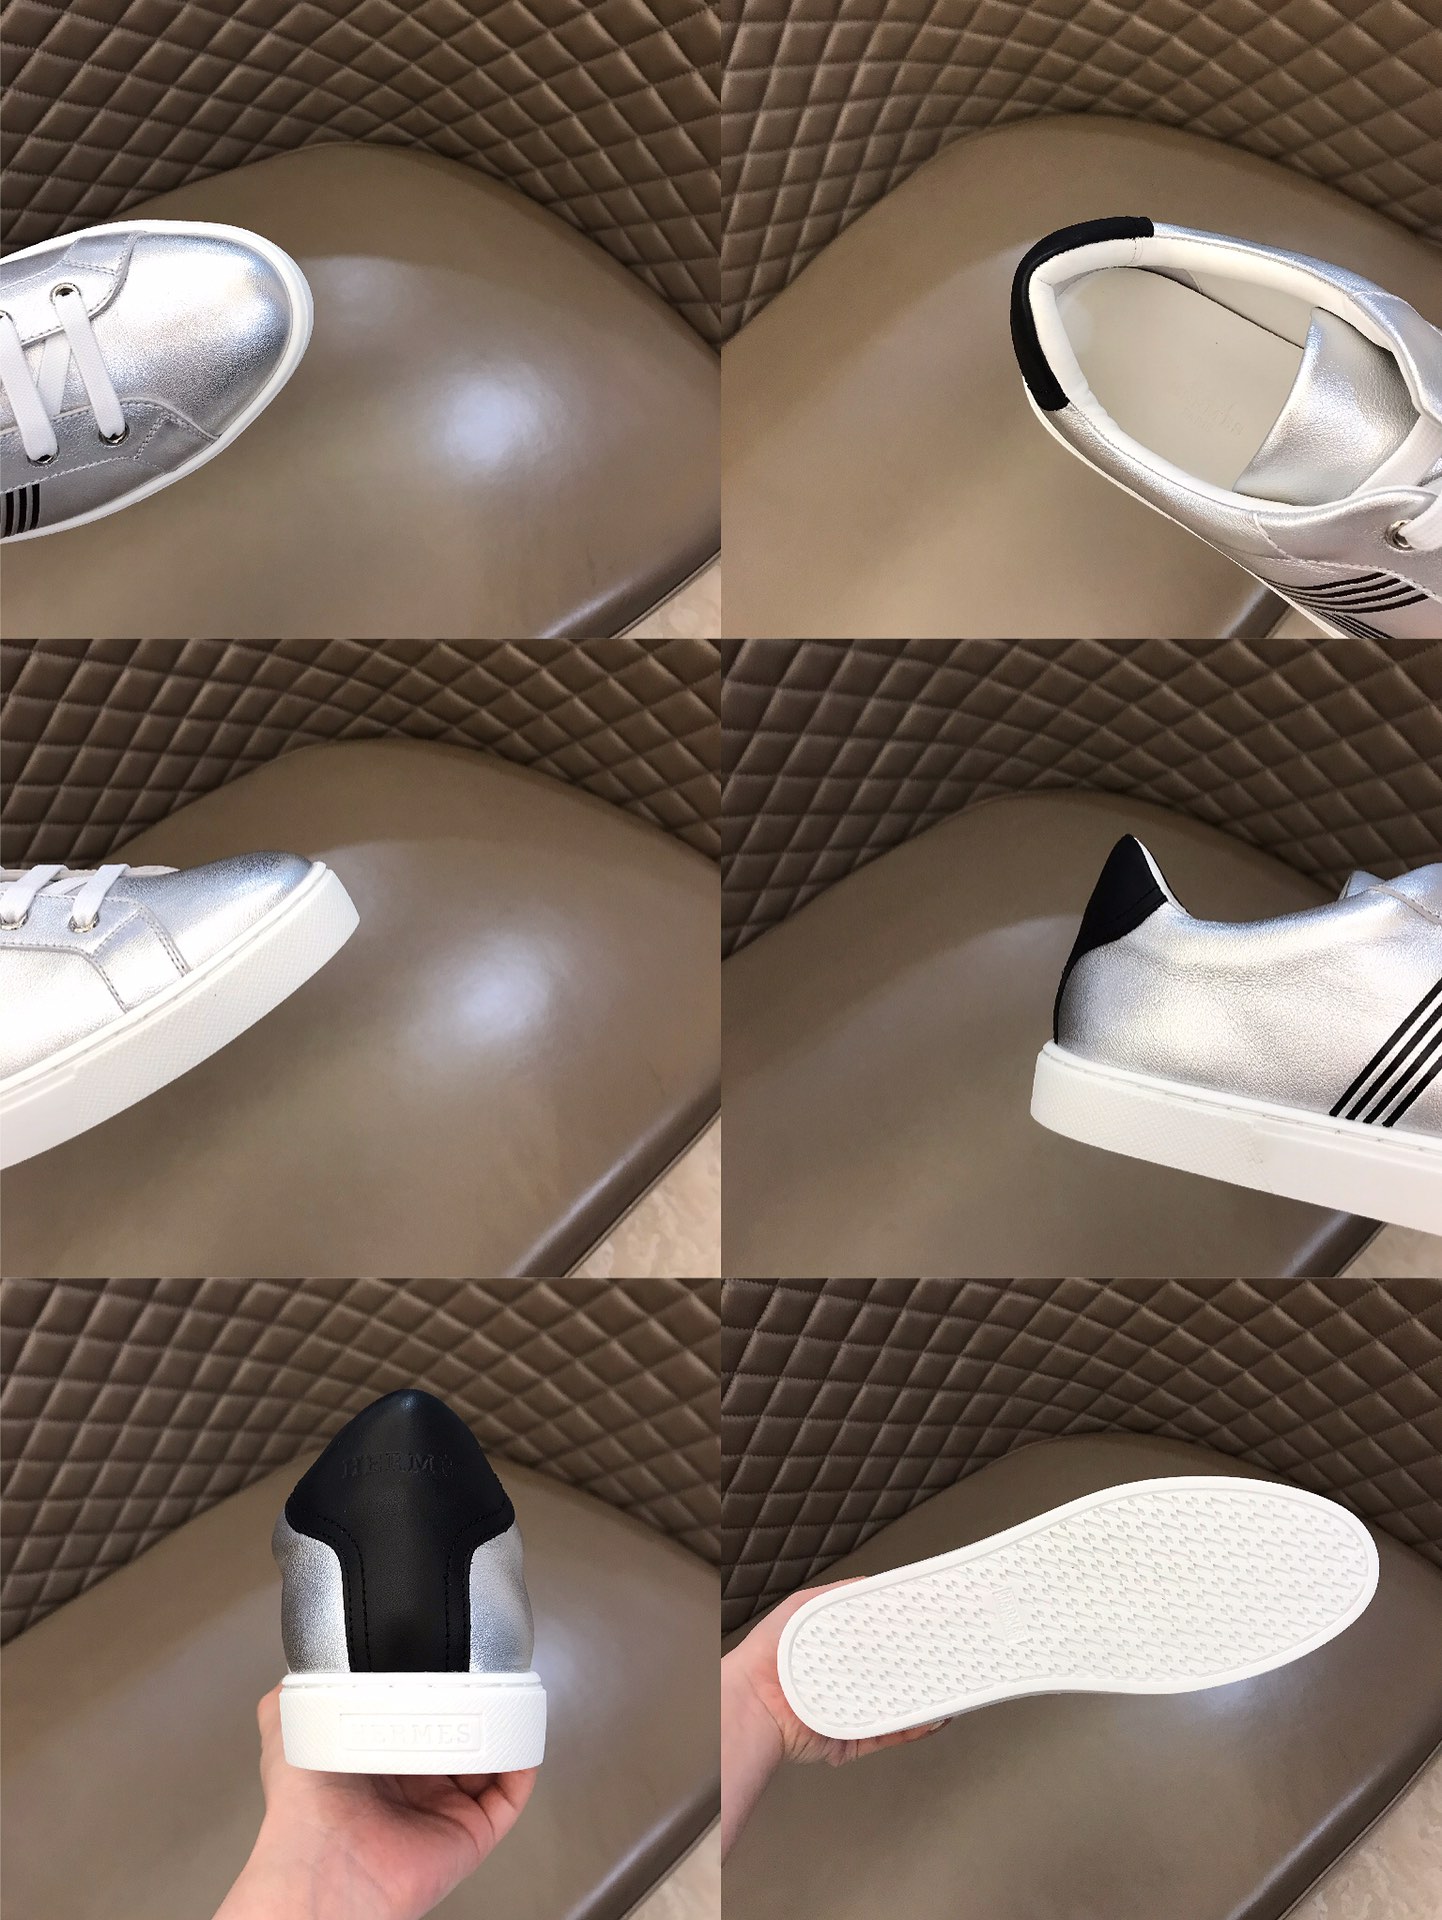 Hermes Sneaker AVANTAGE in White